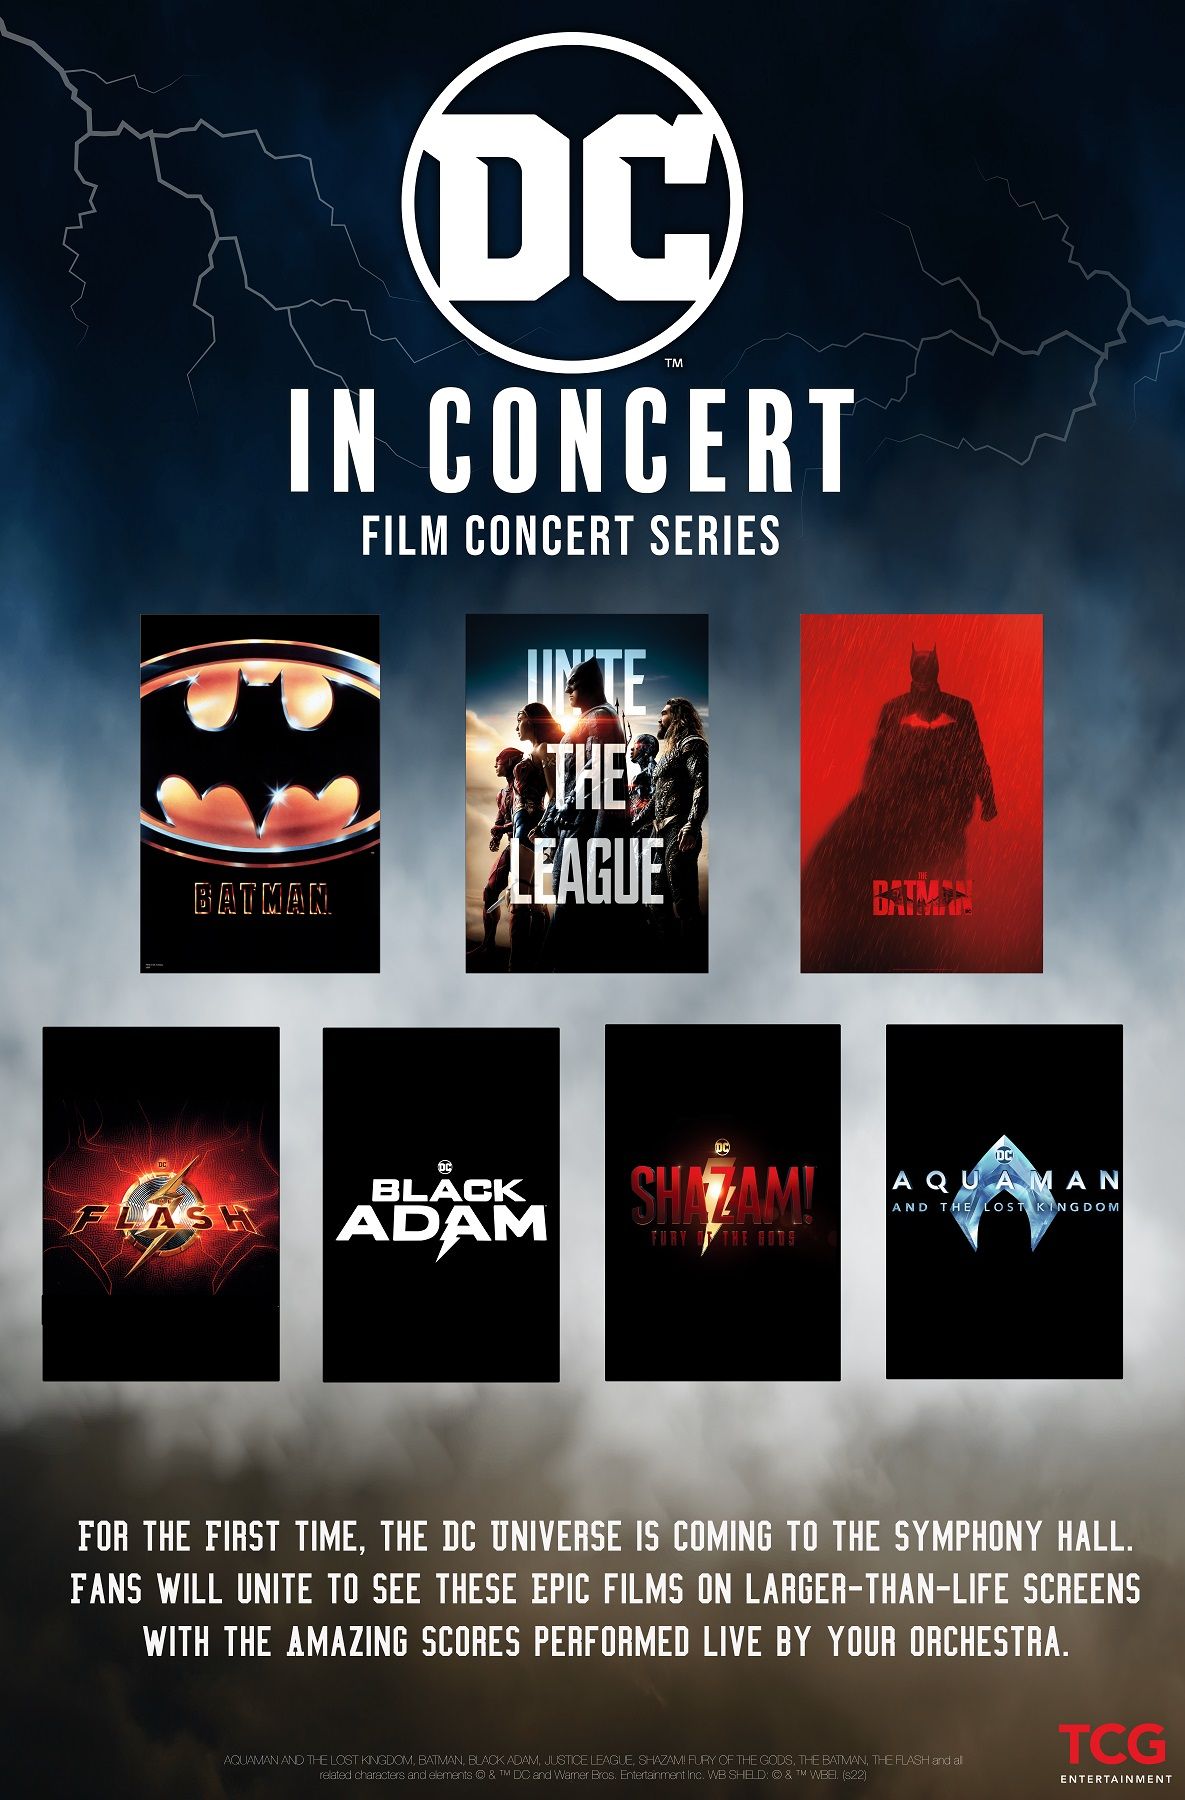 DC IN CONCERT film concert series poster